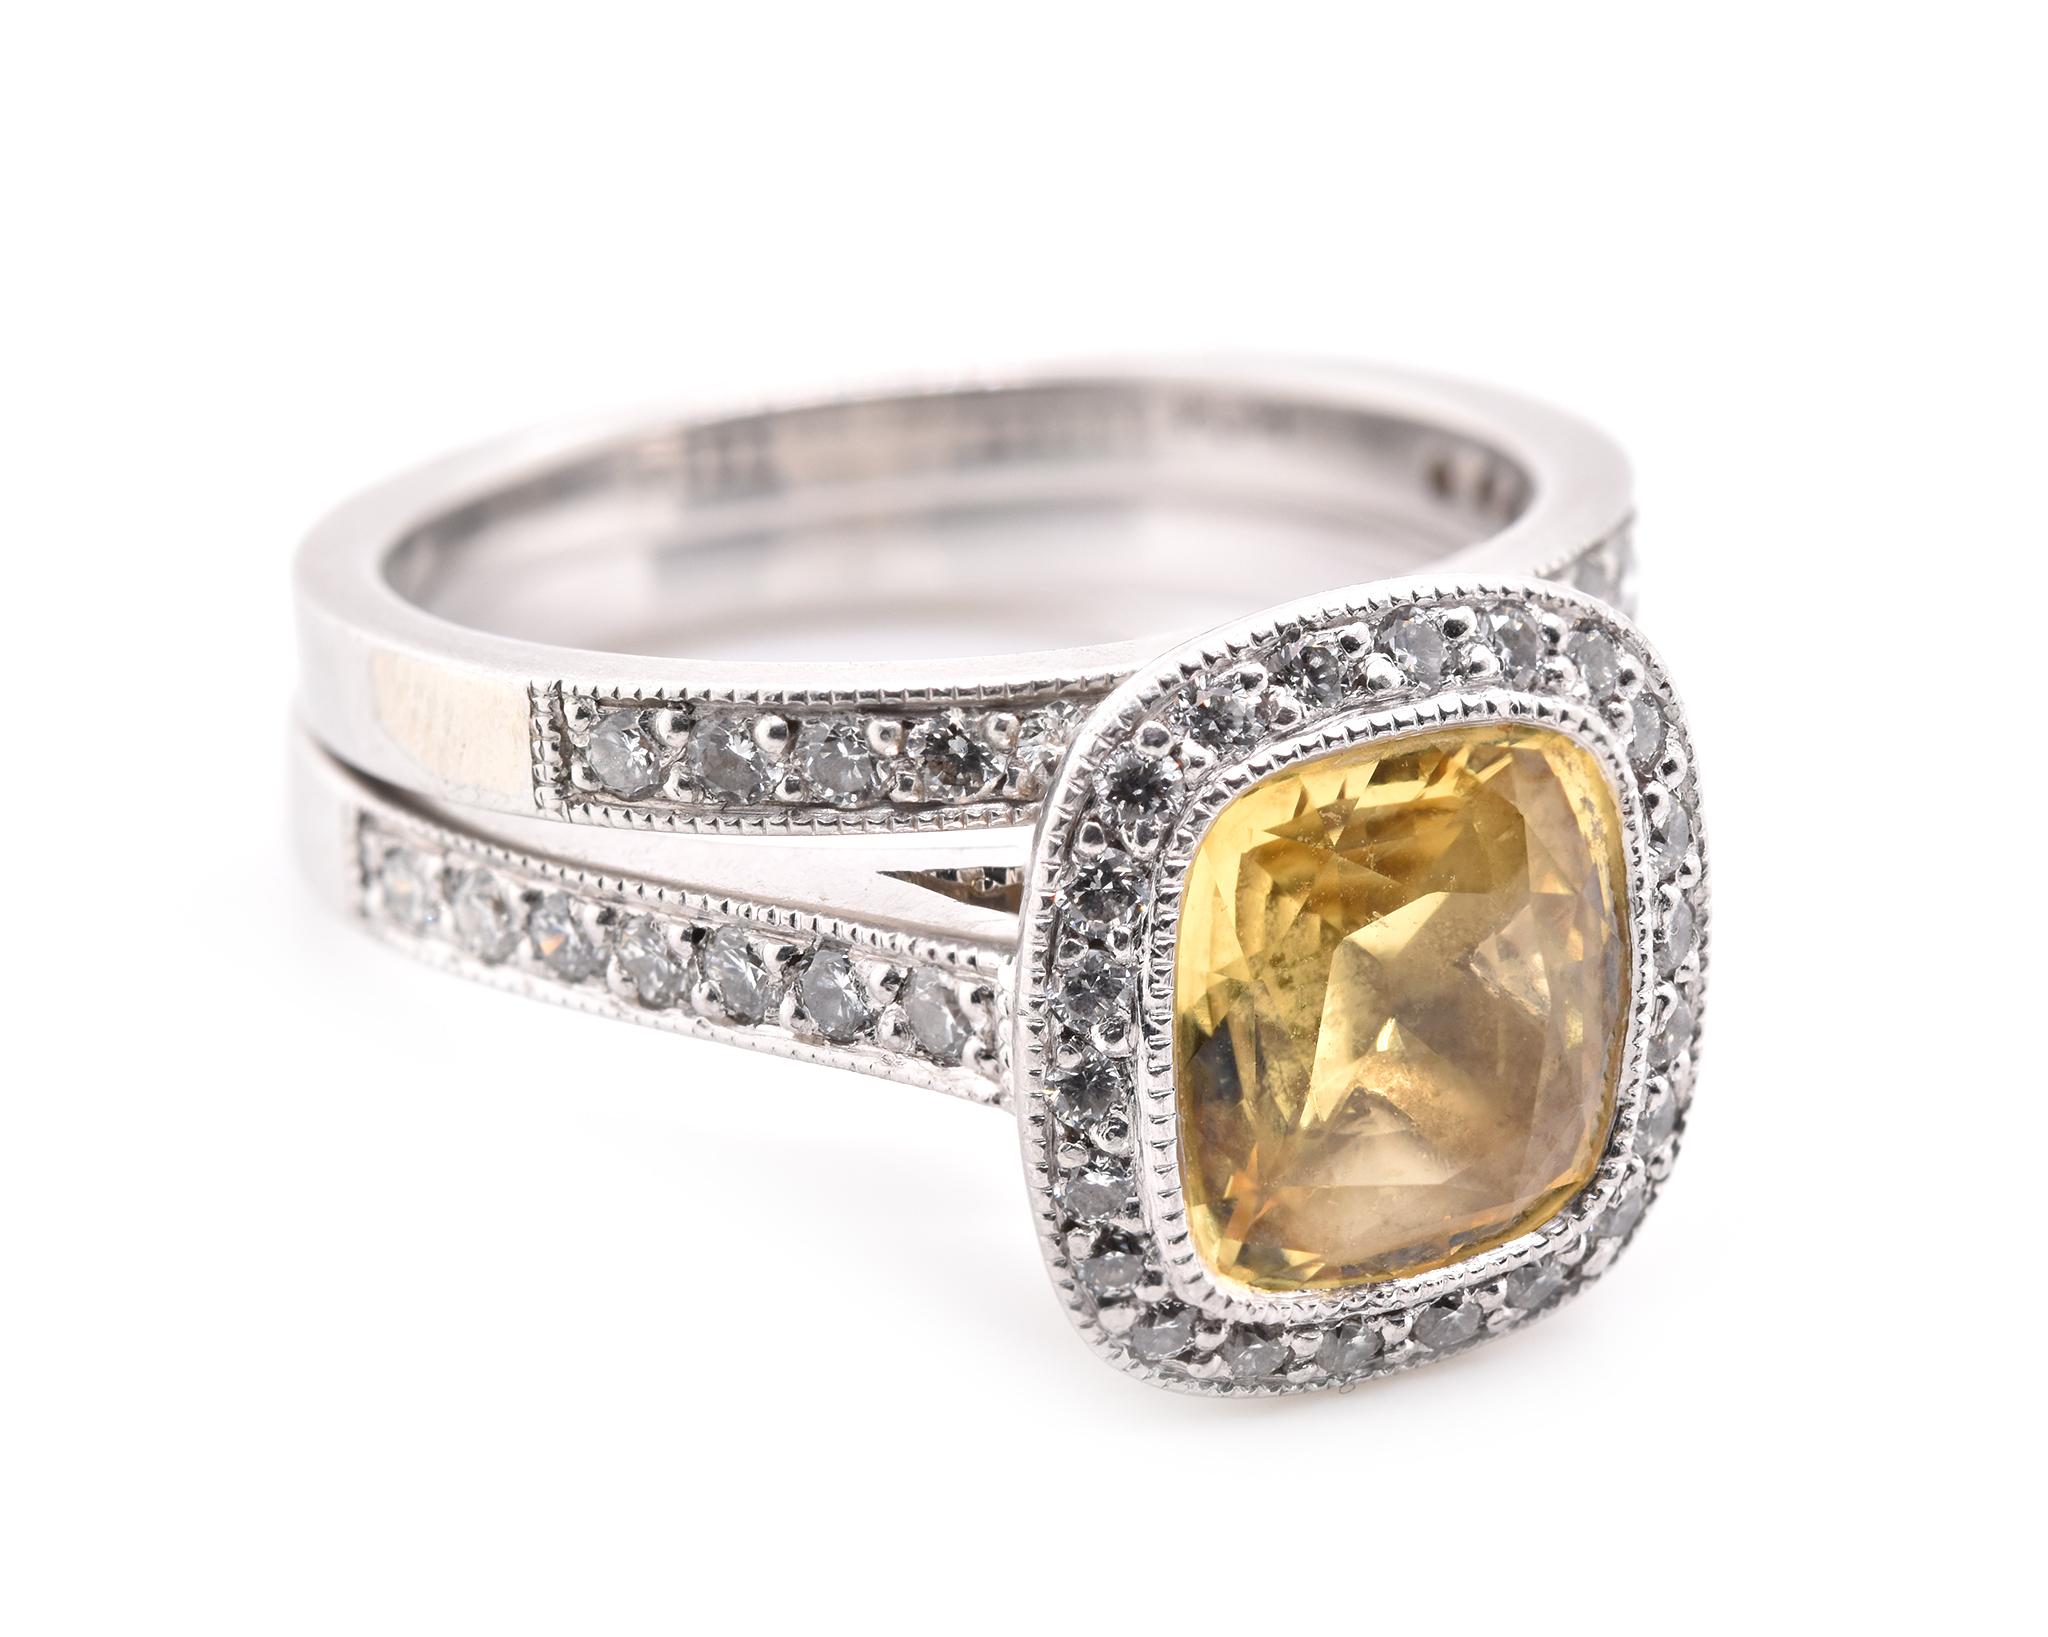 Designer: custom
Material: platinum
Sapphire: 1 yellow modified brilliant cushion cut sapphire = 2.79ct
GIA Certification: 2115869881
Diamonds: 67 round brilliant cuts = 1.25cttw
Color: F-G
Clarity: VS1-VS2
Ring size: 8 ½ (please allow two